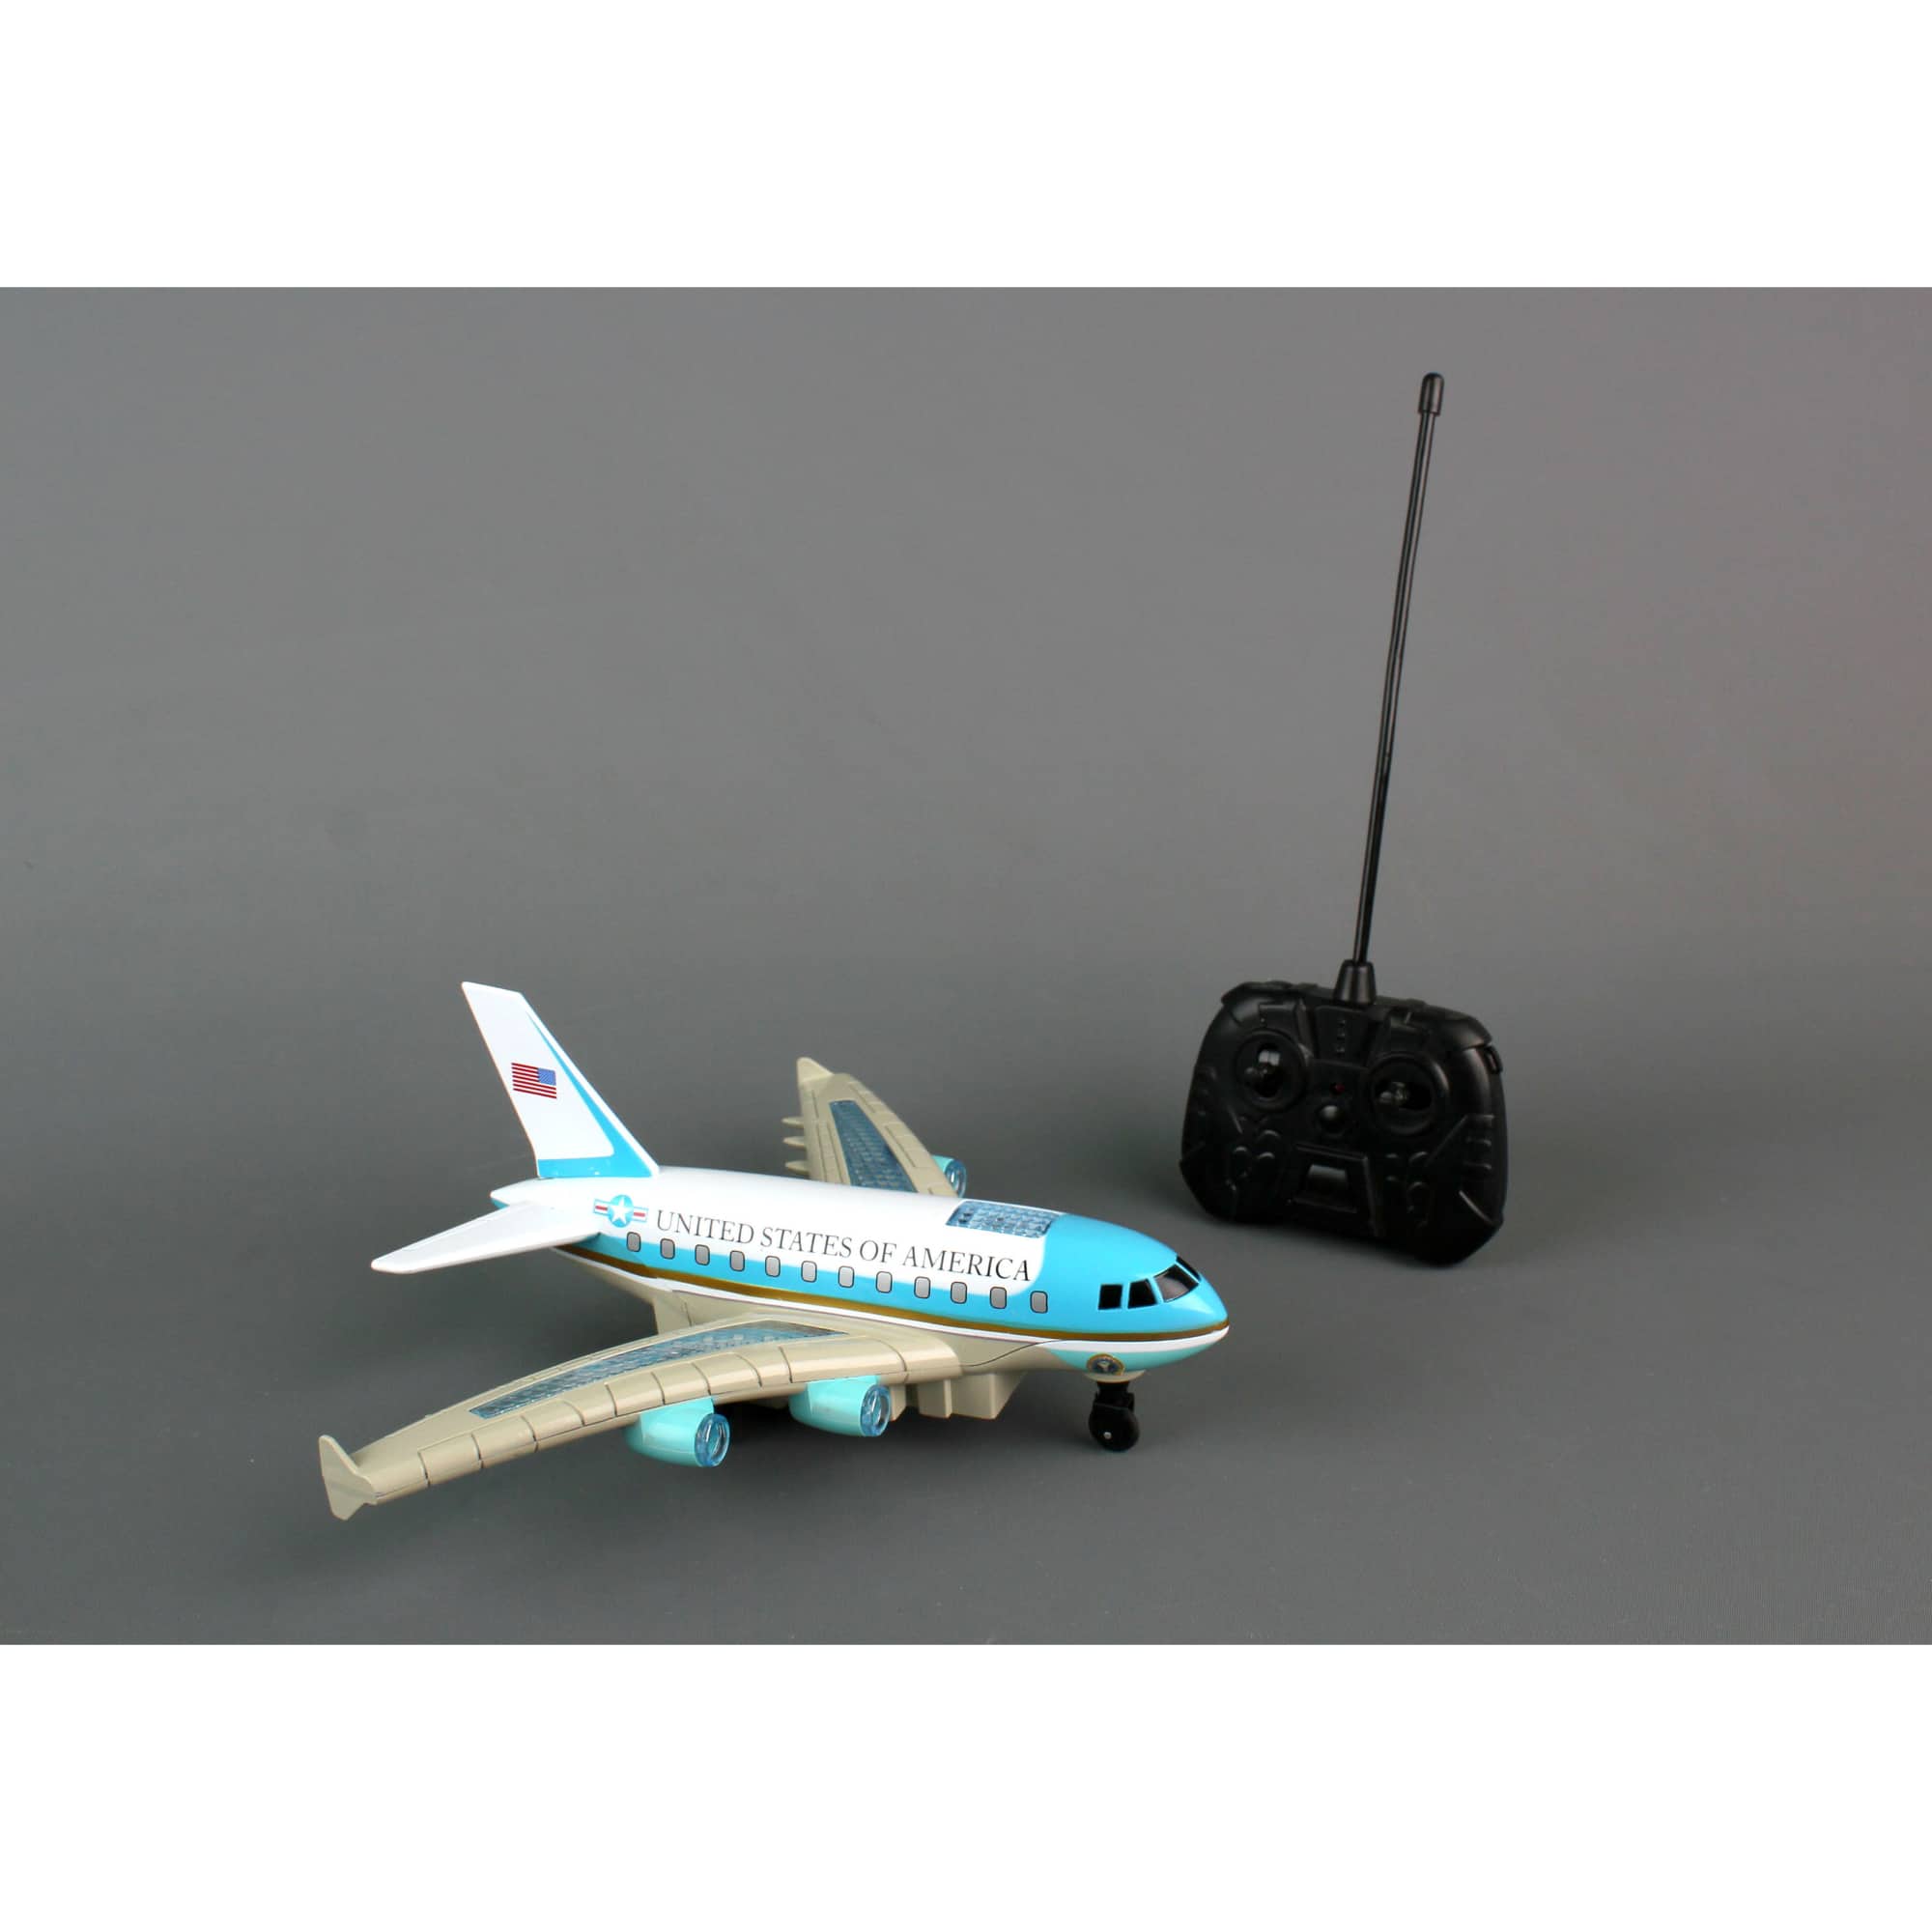 Daron Radio Control Air Force One Plane Toy